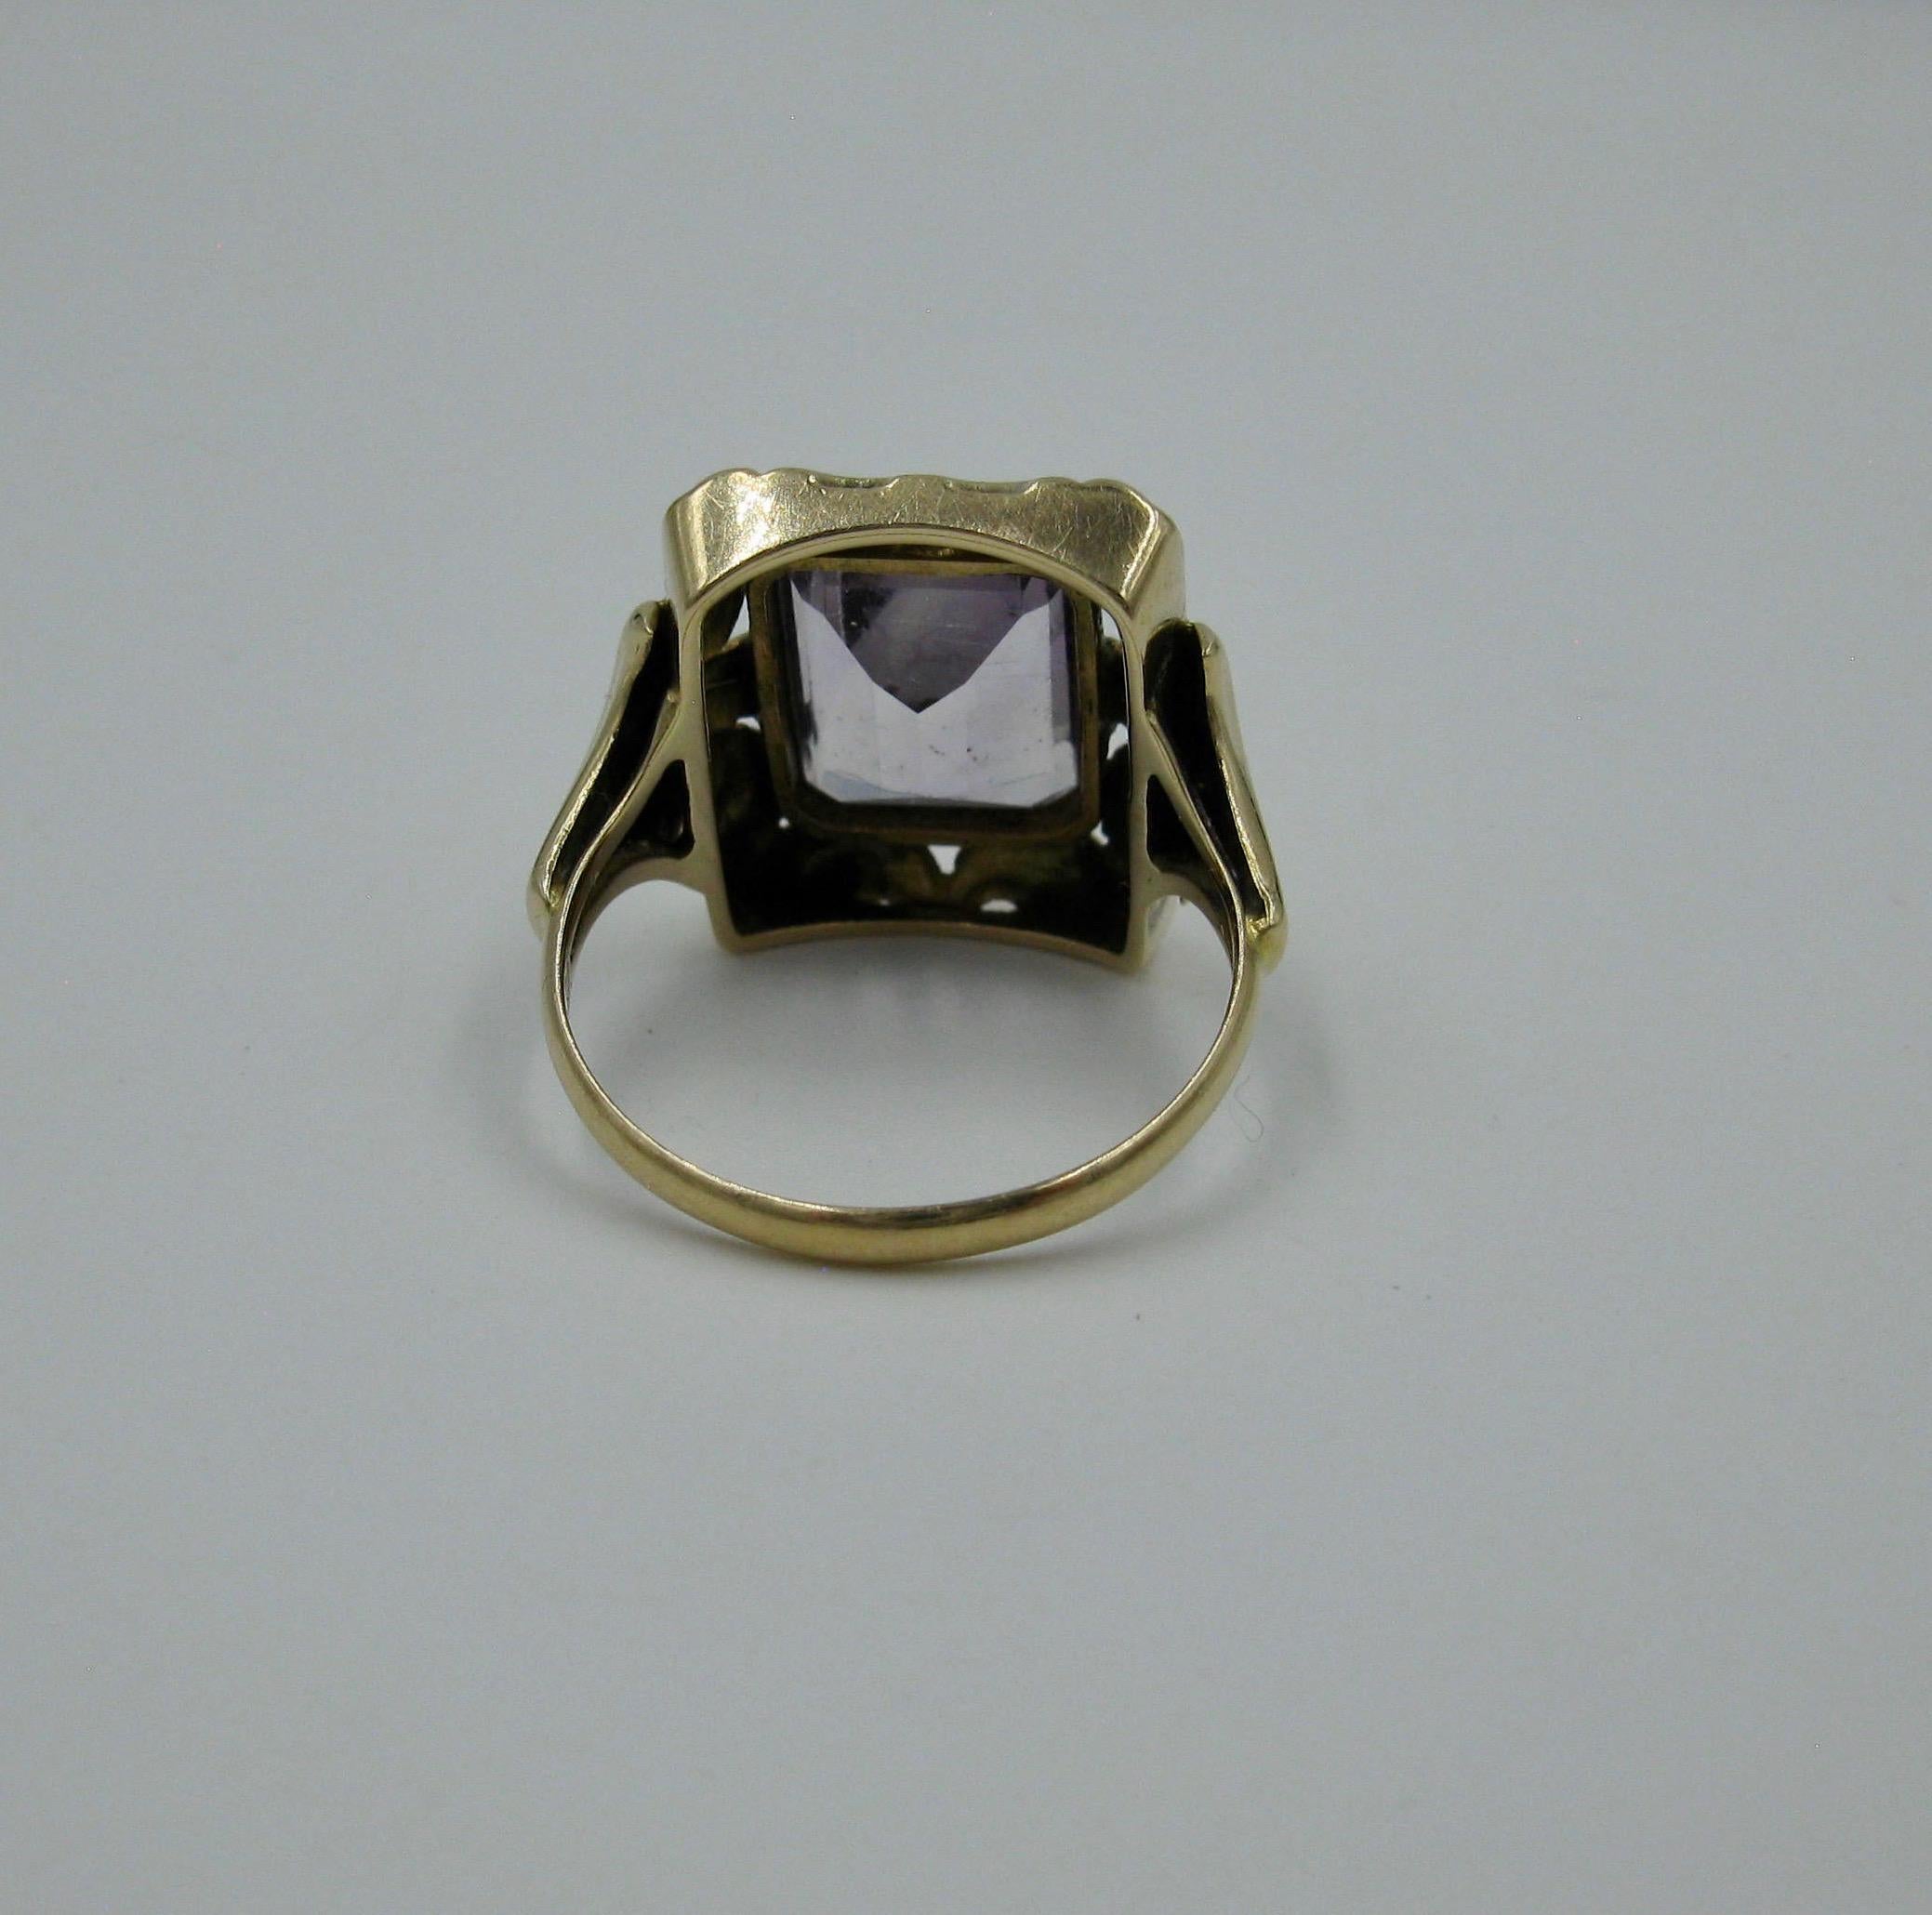 Mid-Century Modern Amethyst Ring Finland 14 Karat Gold 1957 Modernist Eames Era For Sale 4